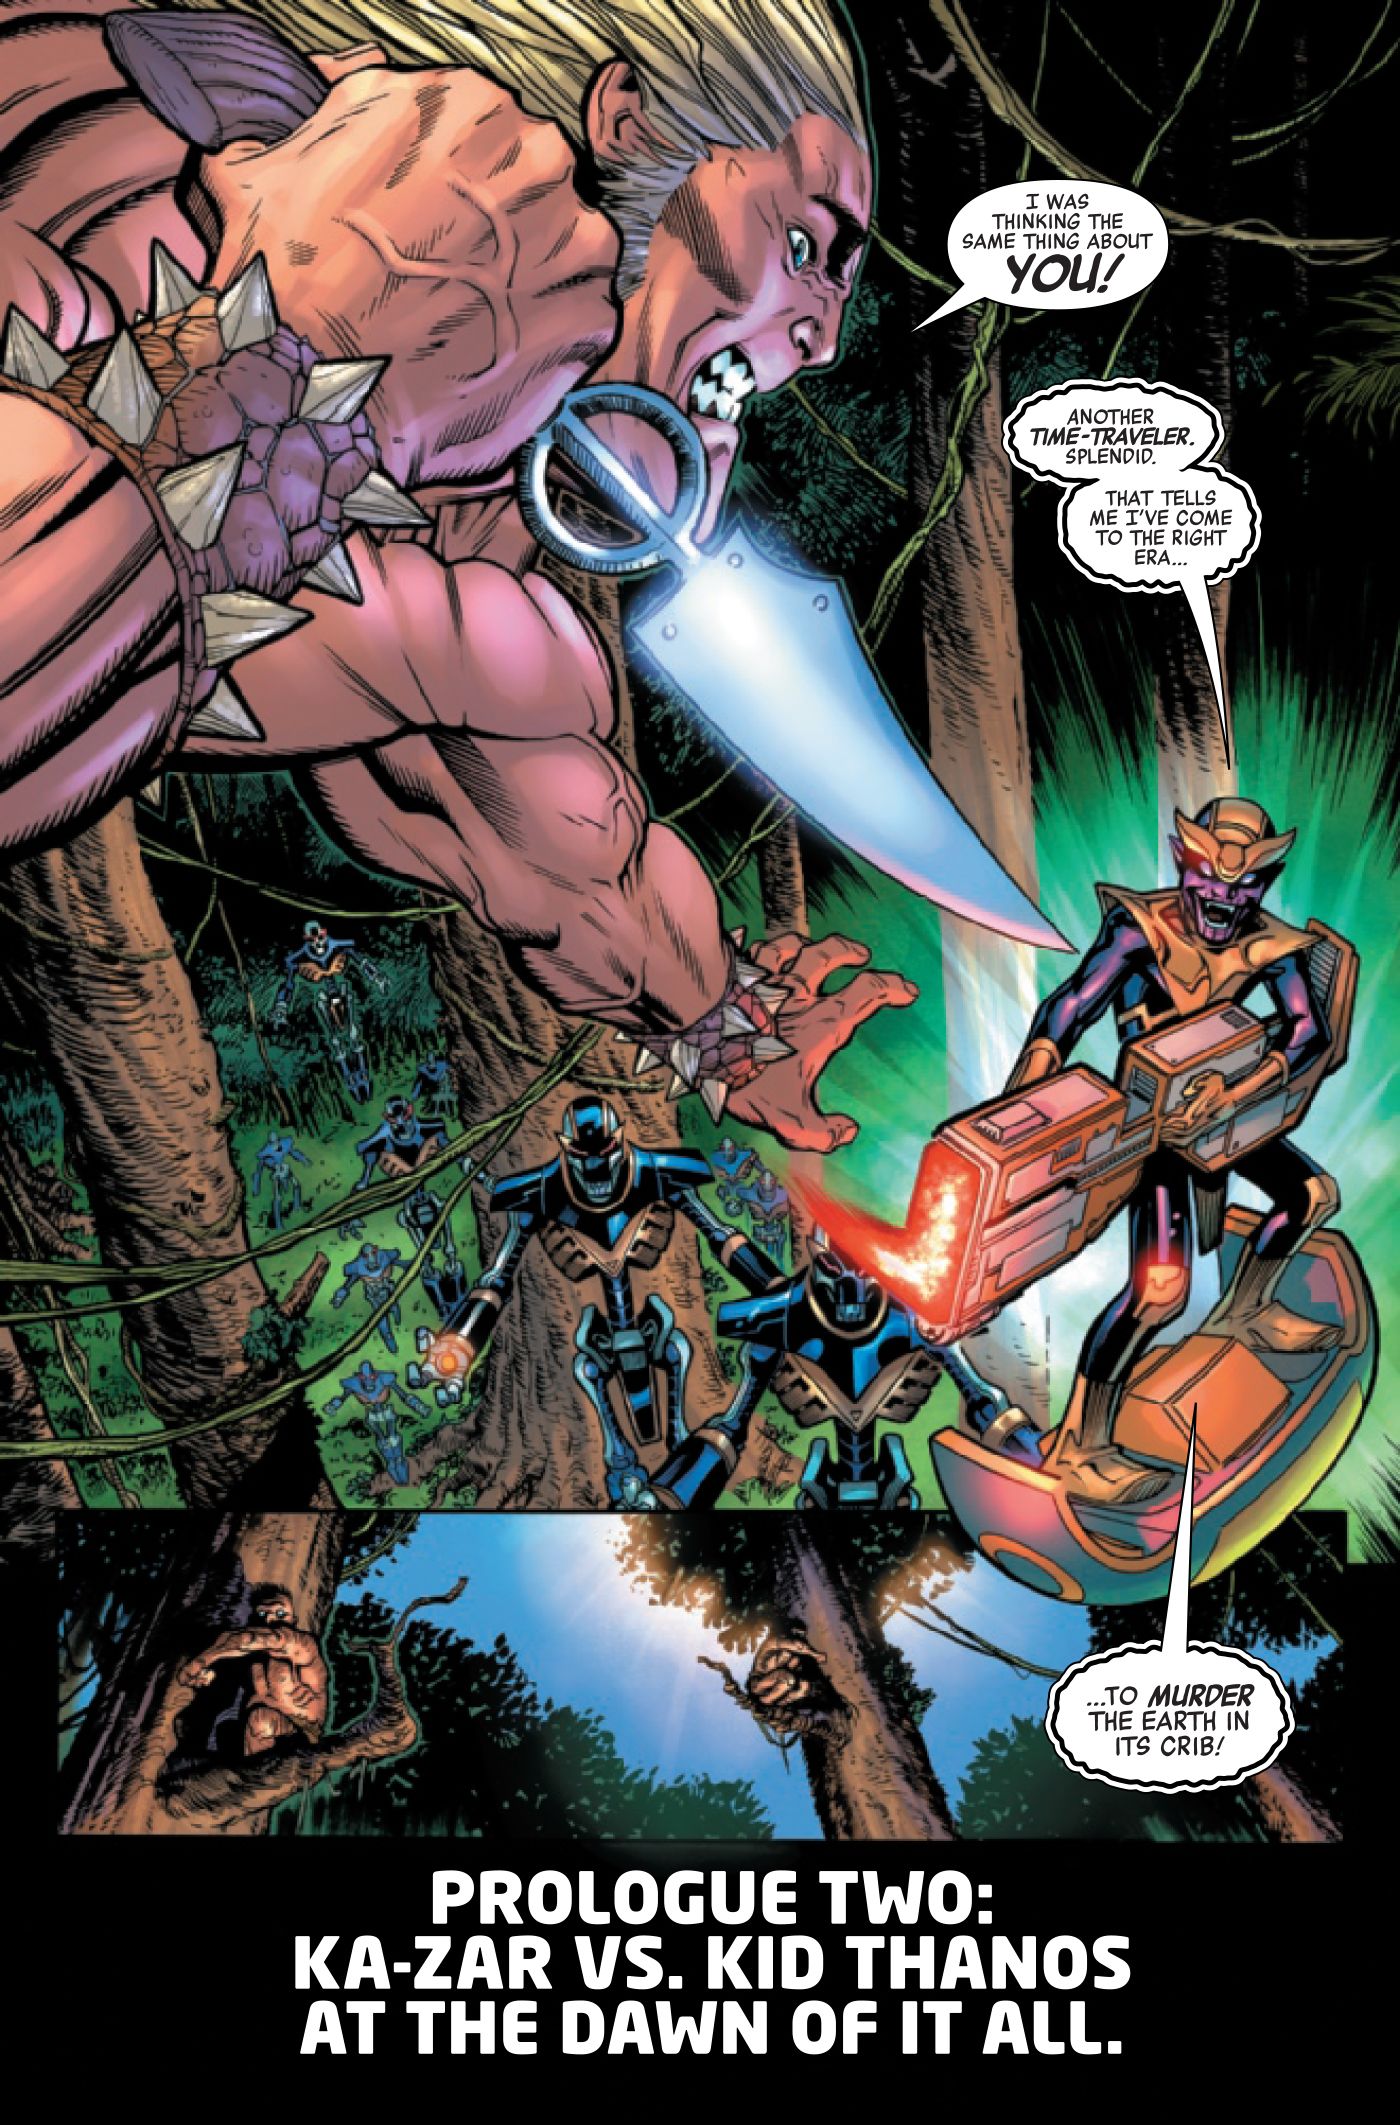 Ka-Zar fights a new variant of Thanos, Kid Thanos.